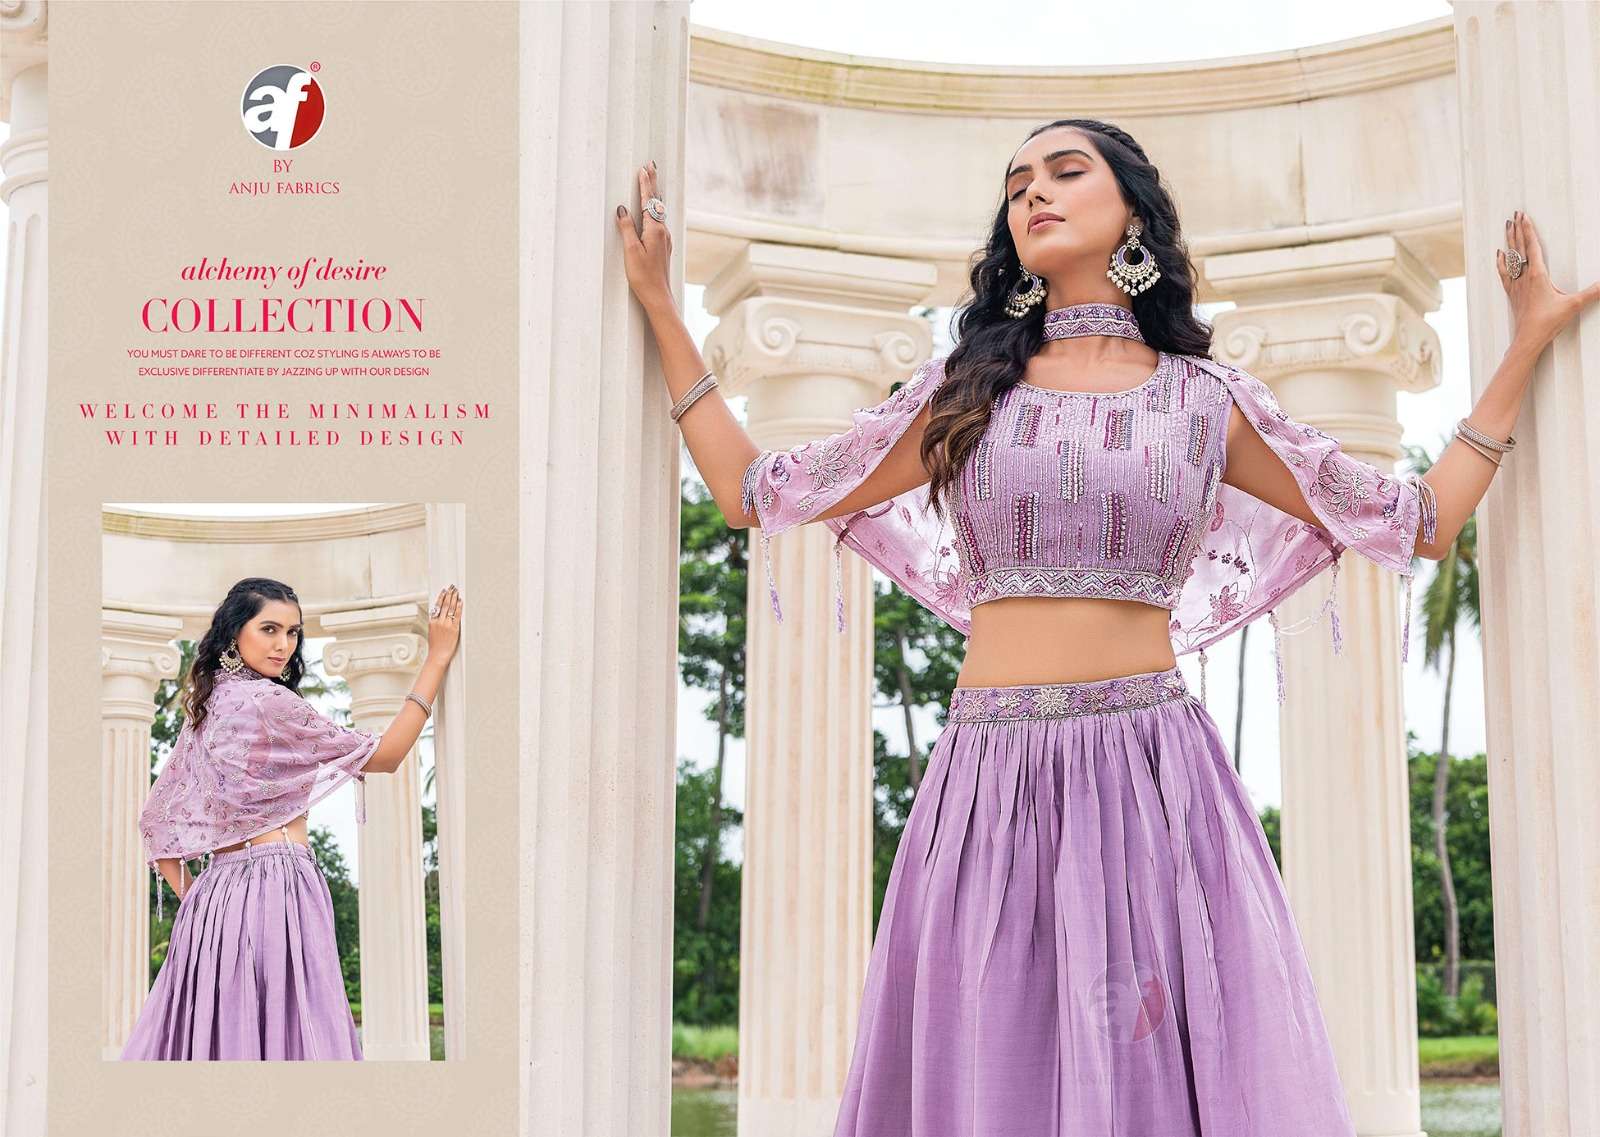 anju fabrics boutique blast 7301-7303 series latest designer festive wear salwar kameez set wholesaler surat gujarat